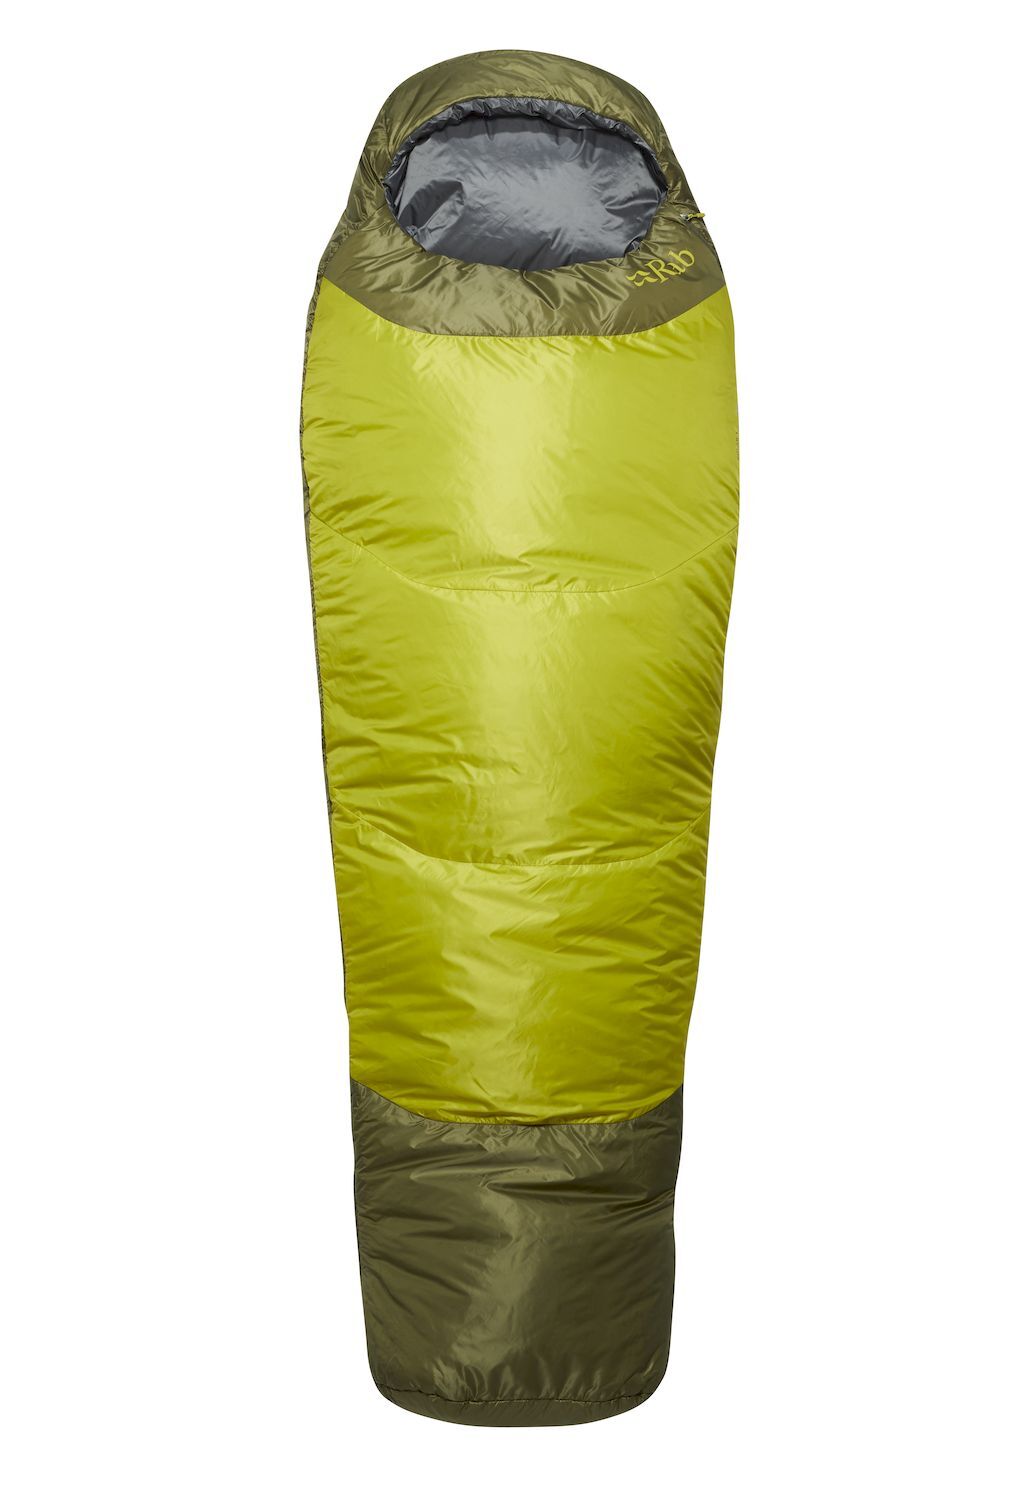 Rab Solar 1 - Sleeping bag - 0